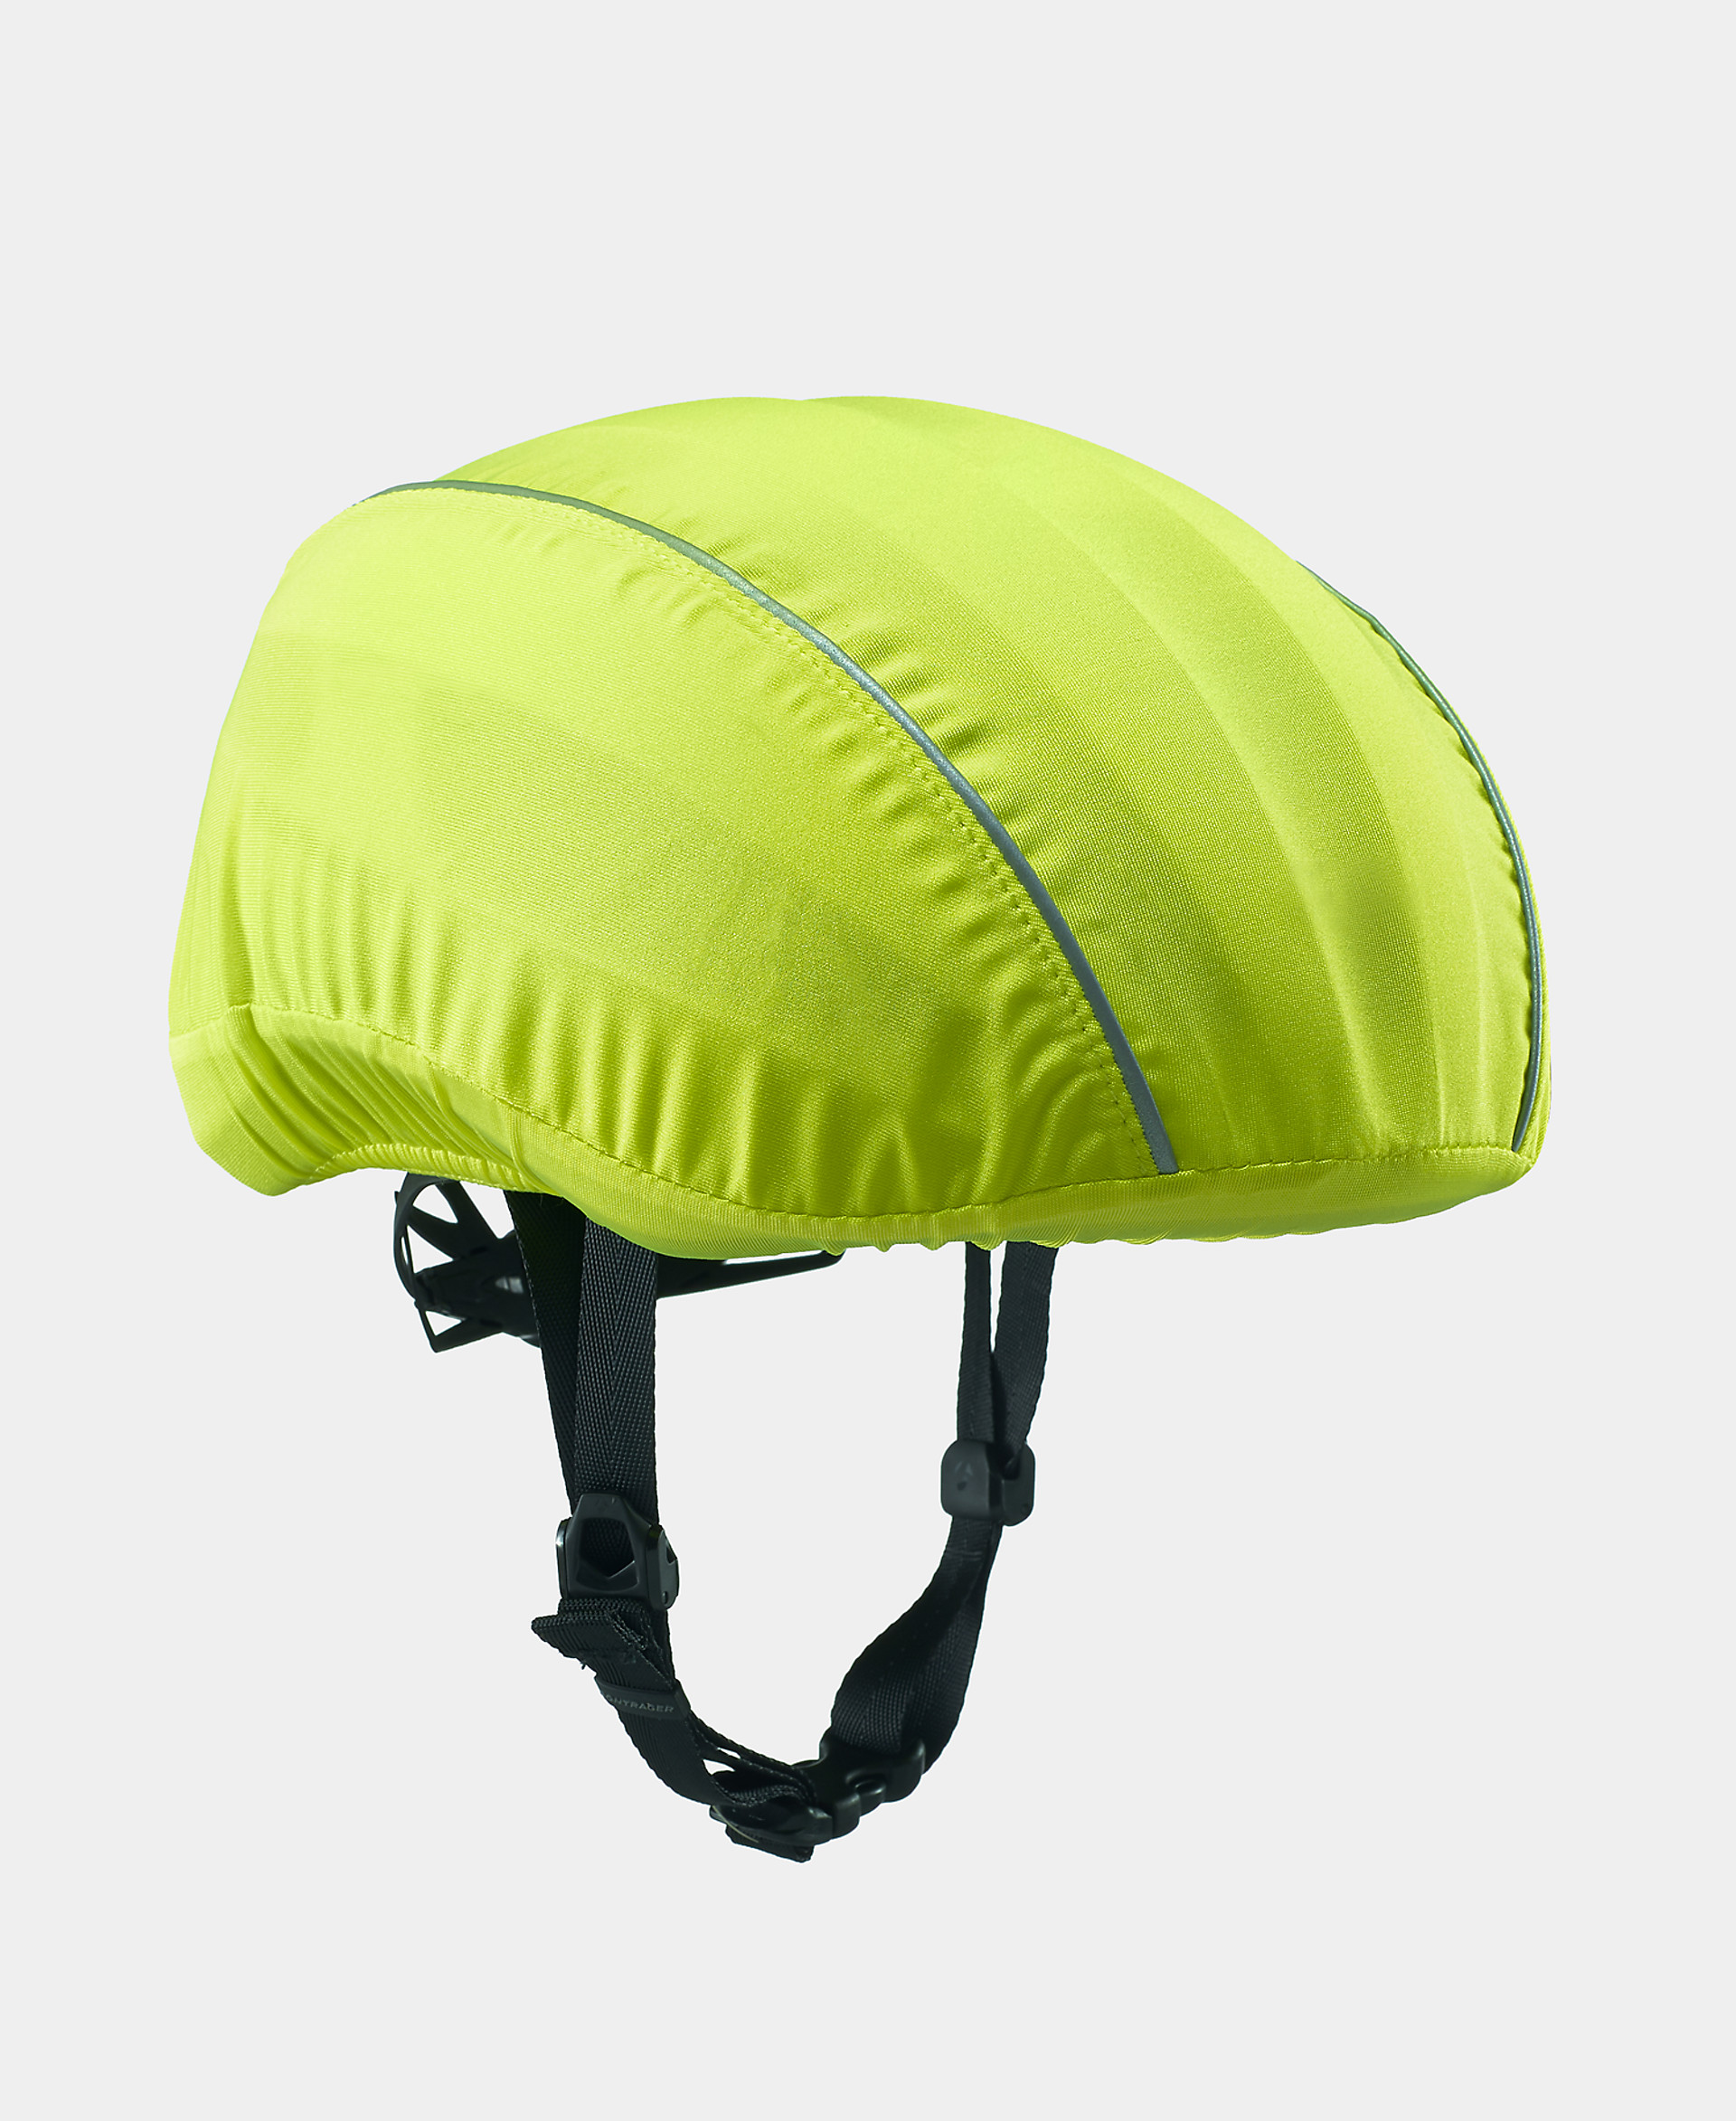 Aftermarket Replacement Pads Liner for Trek Interval 2 Helmet 